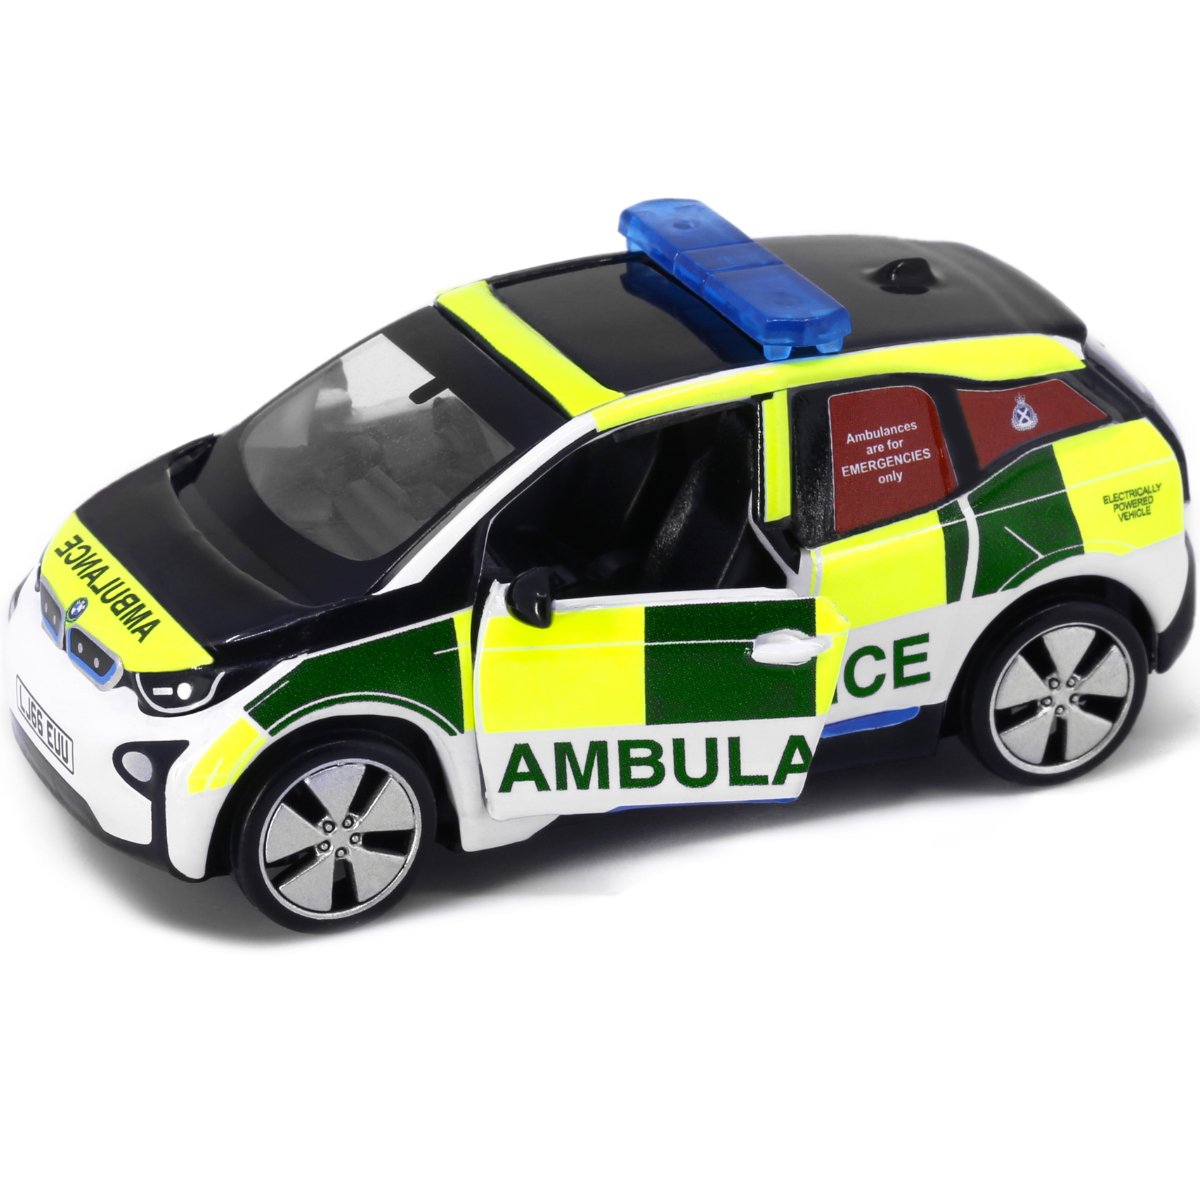 Tiny Models BMW i3 Emergency Services Bundle - 1:64 Scale - Phillips Hobbies